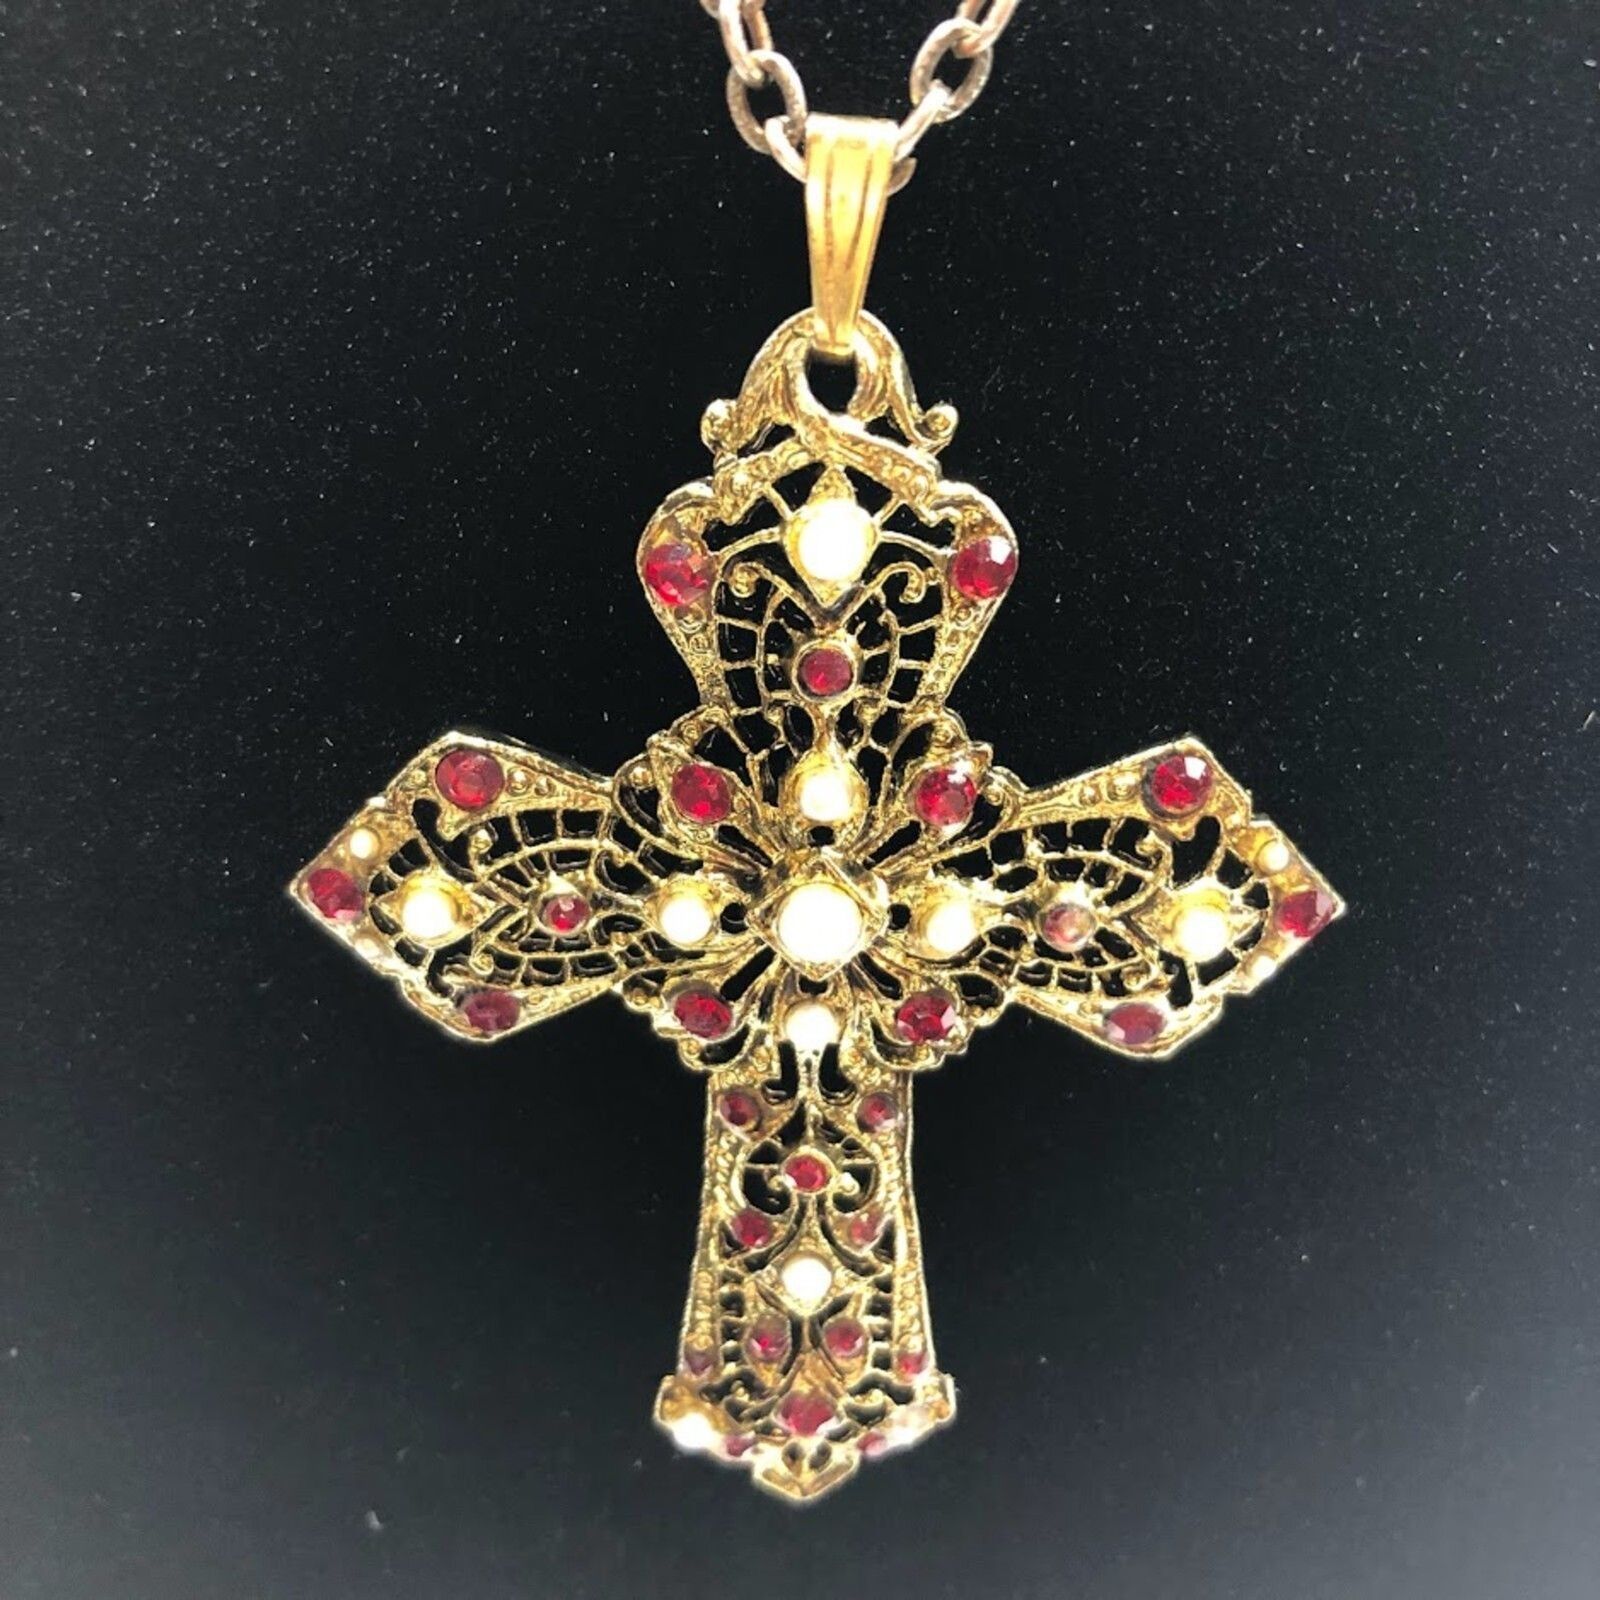 Primary image for Vintage Ornate Decorative Cross Women's Gold Tone Faux Pearls Pendant Elegant